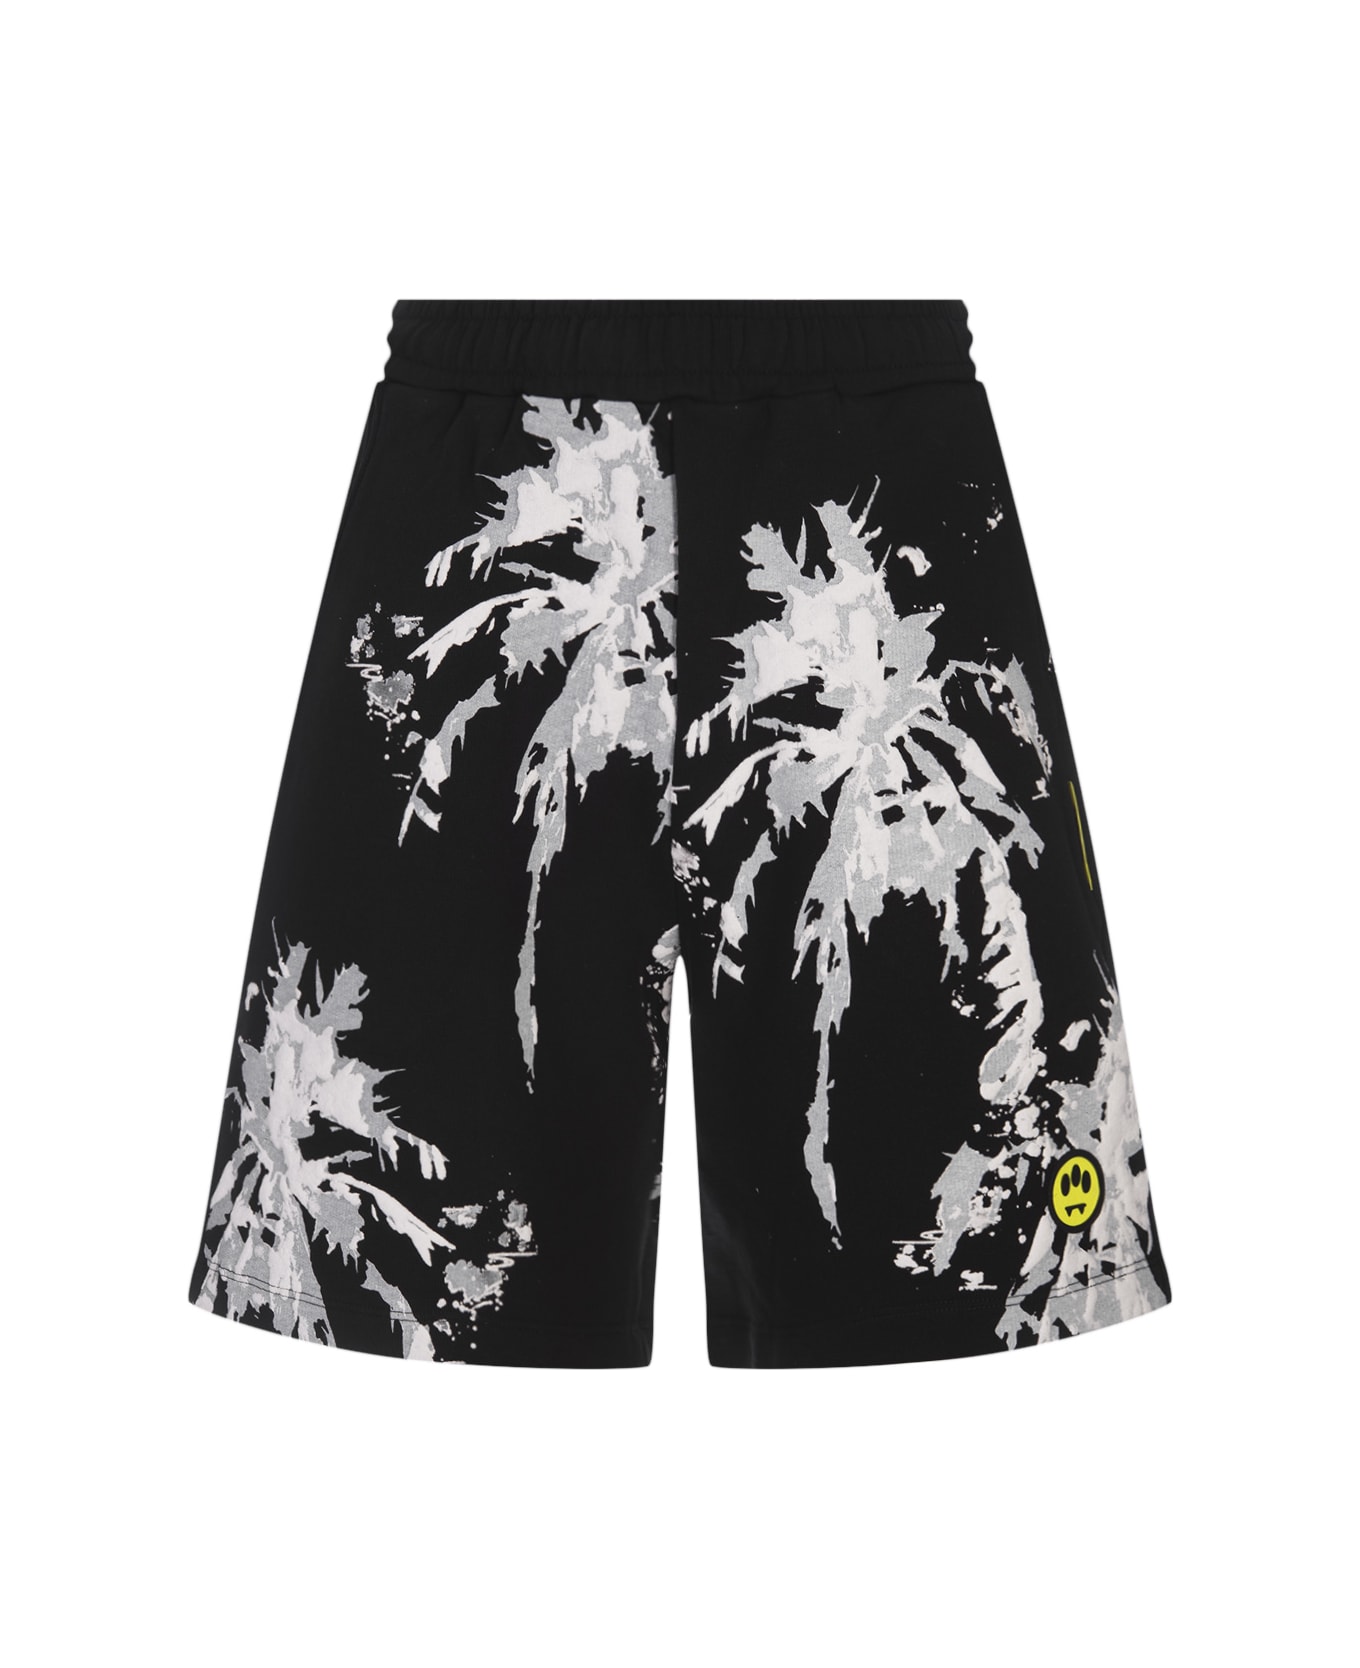 Barrow Black Shorts With Palms Graphic Print - Black name:468